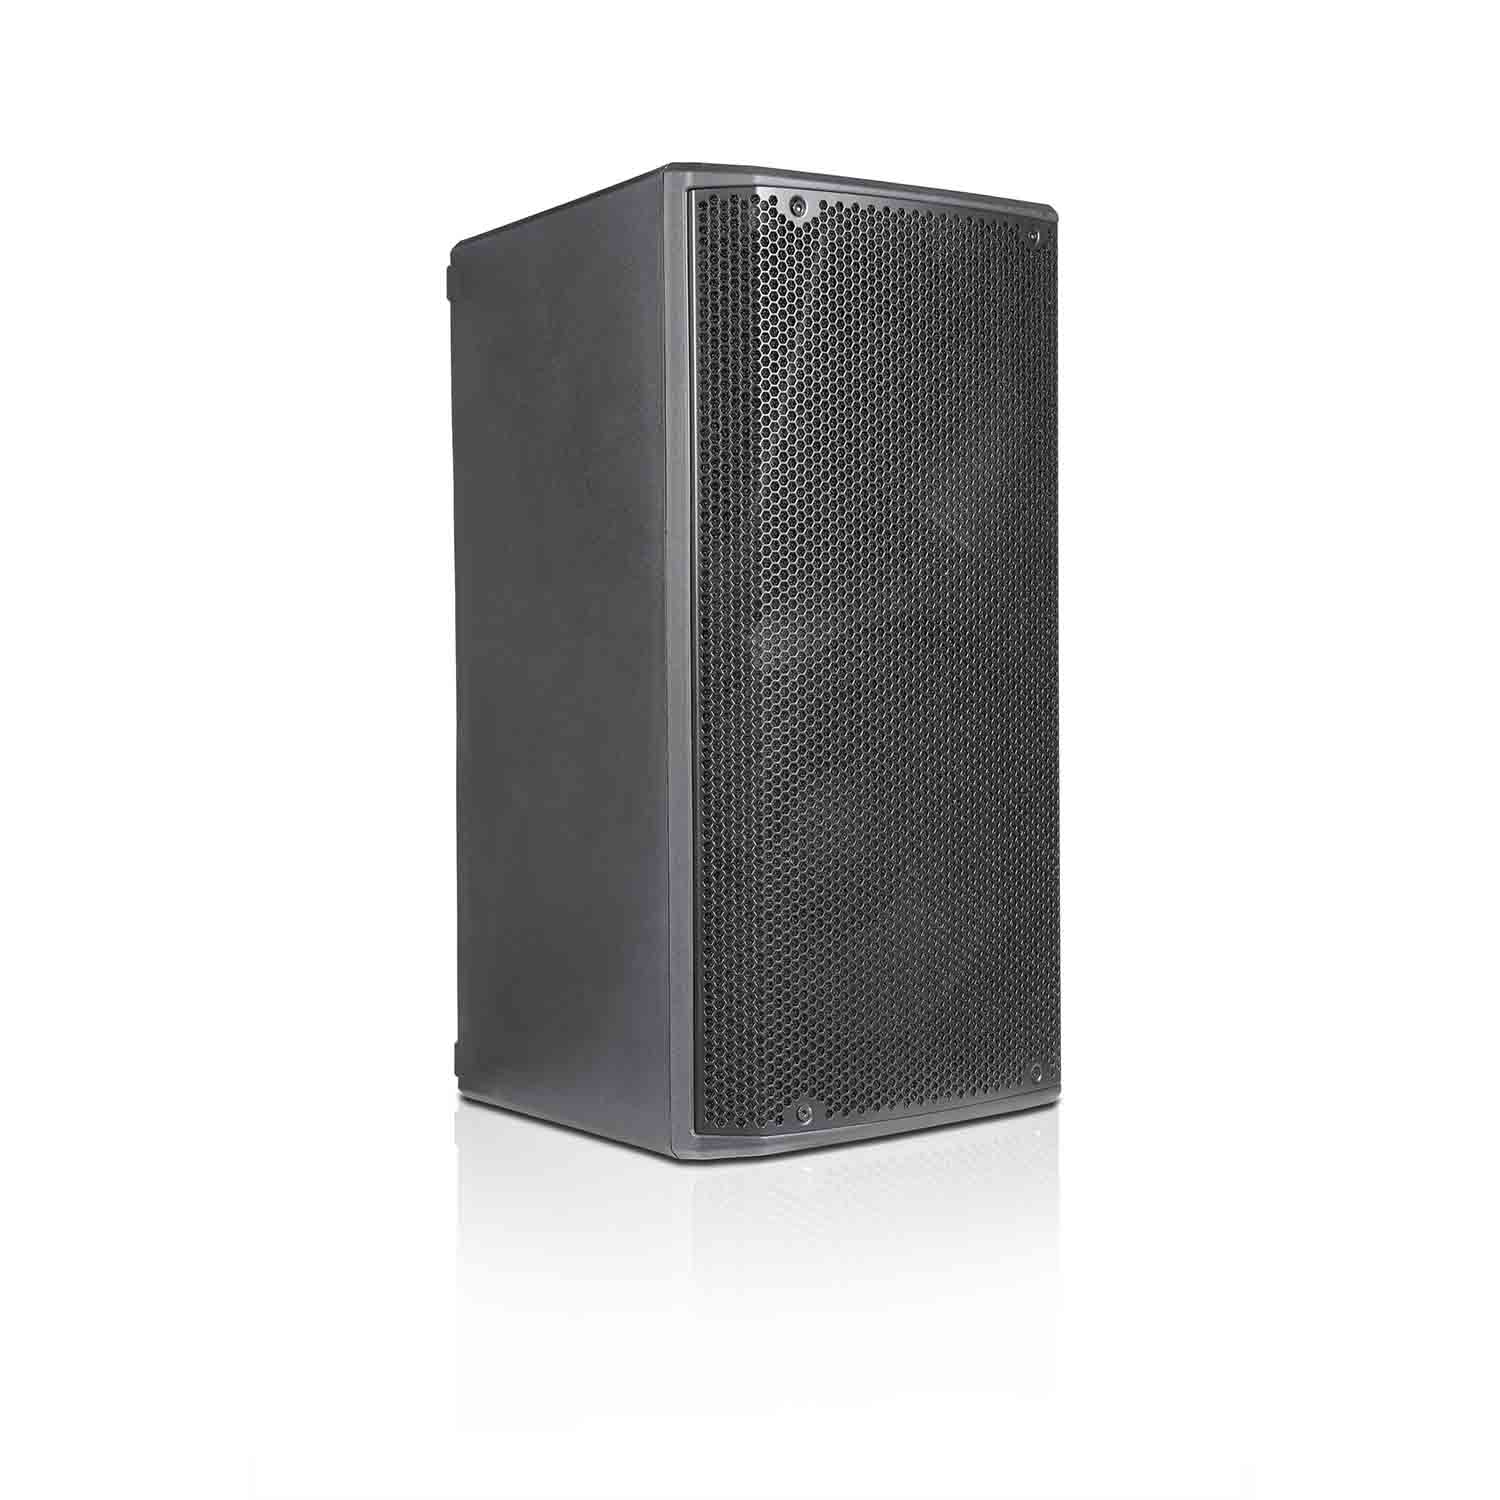 dB Technologies OPERA 15, 15" 2-Way Active Speaker - 600W by DB Technologies